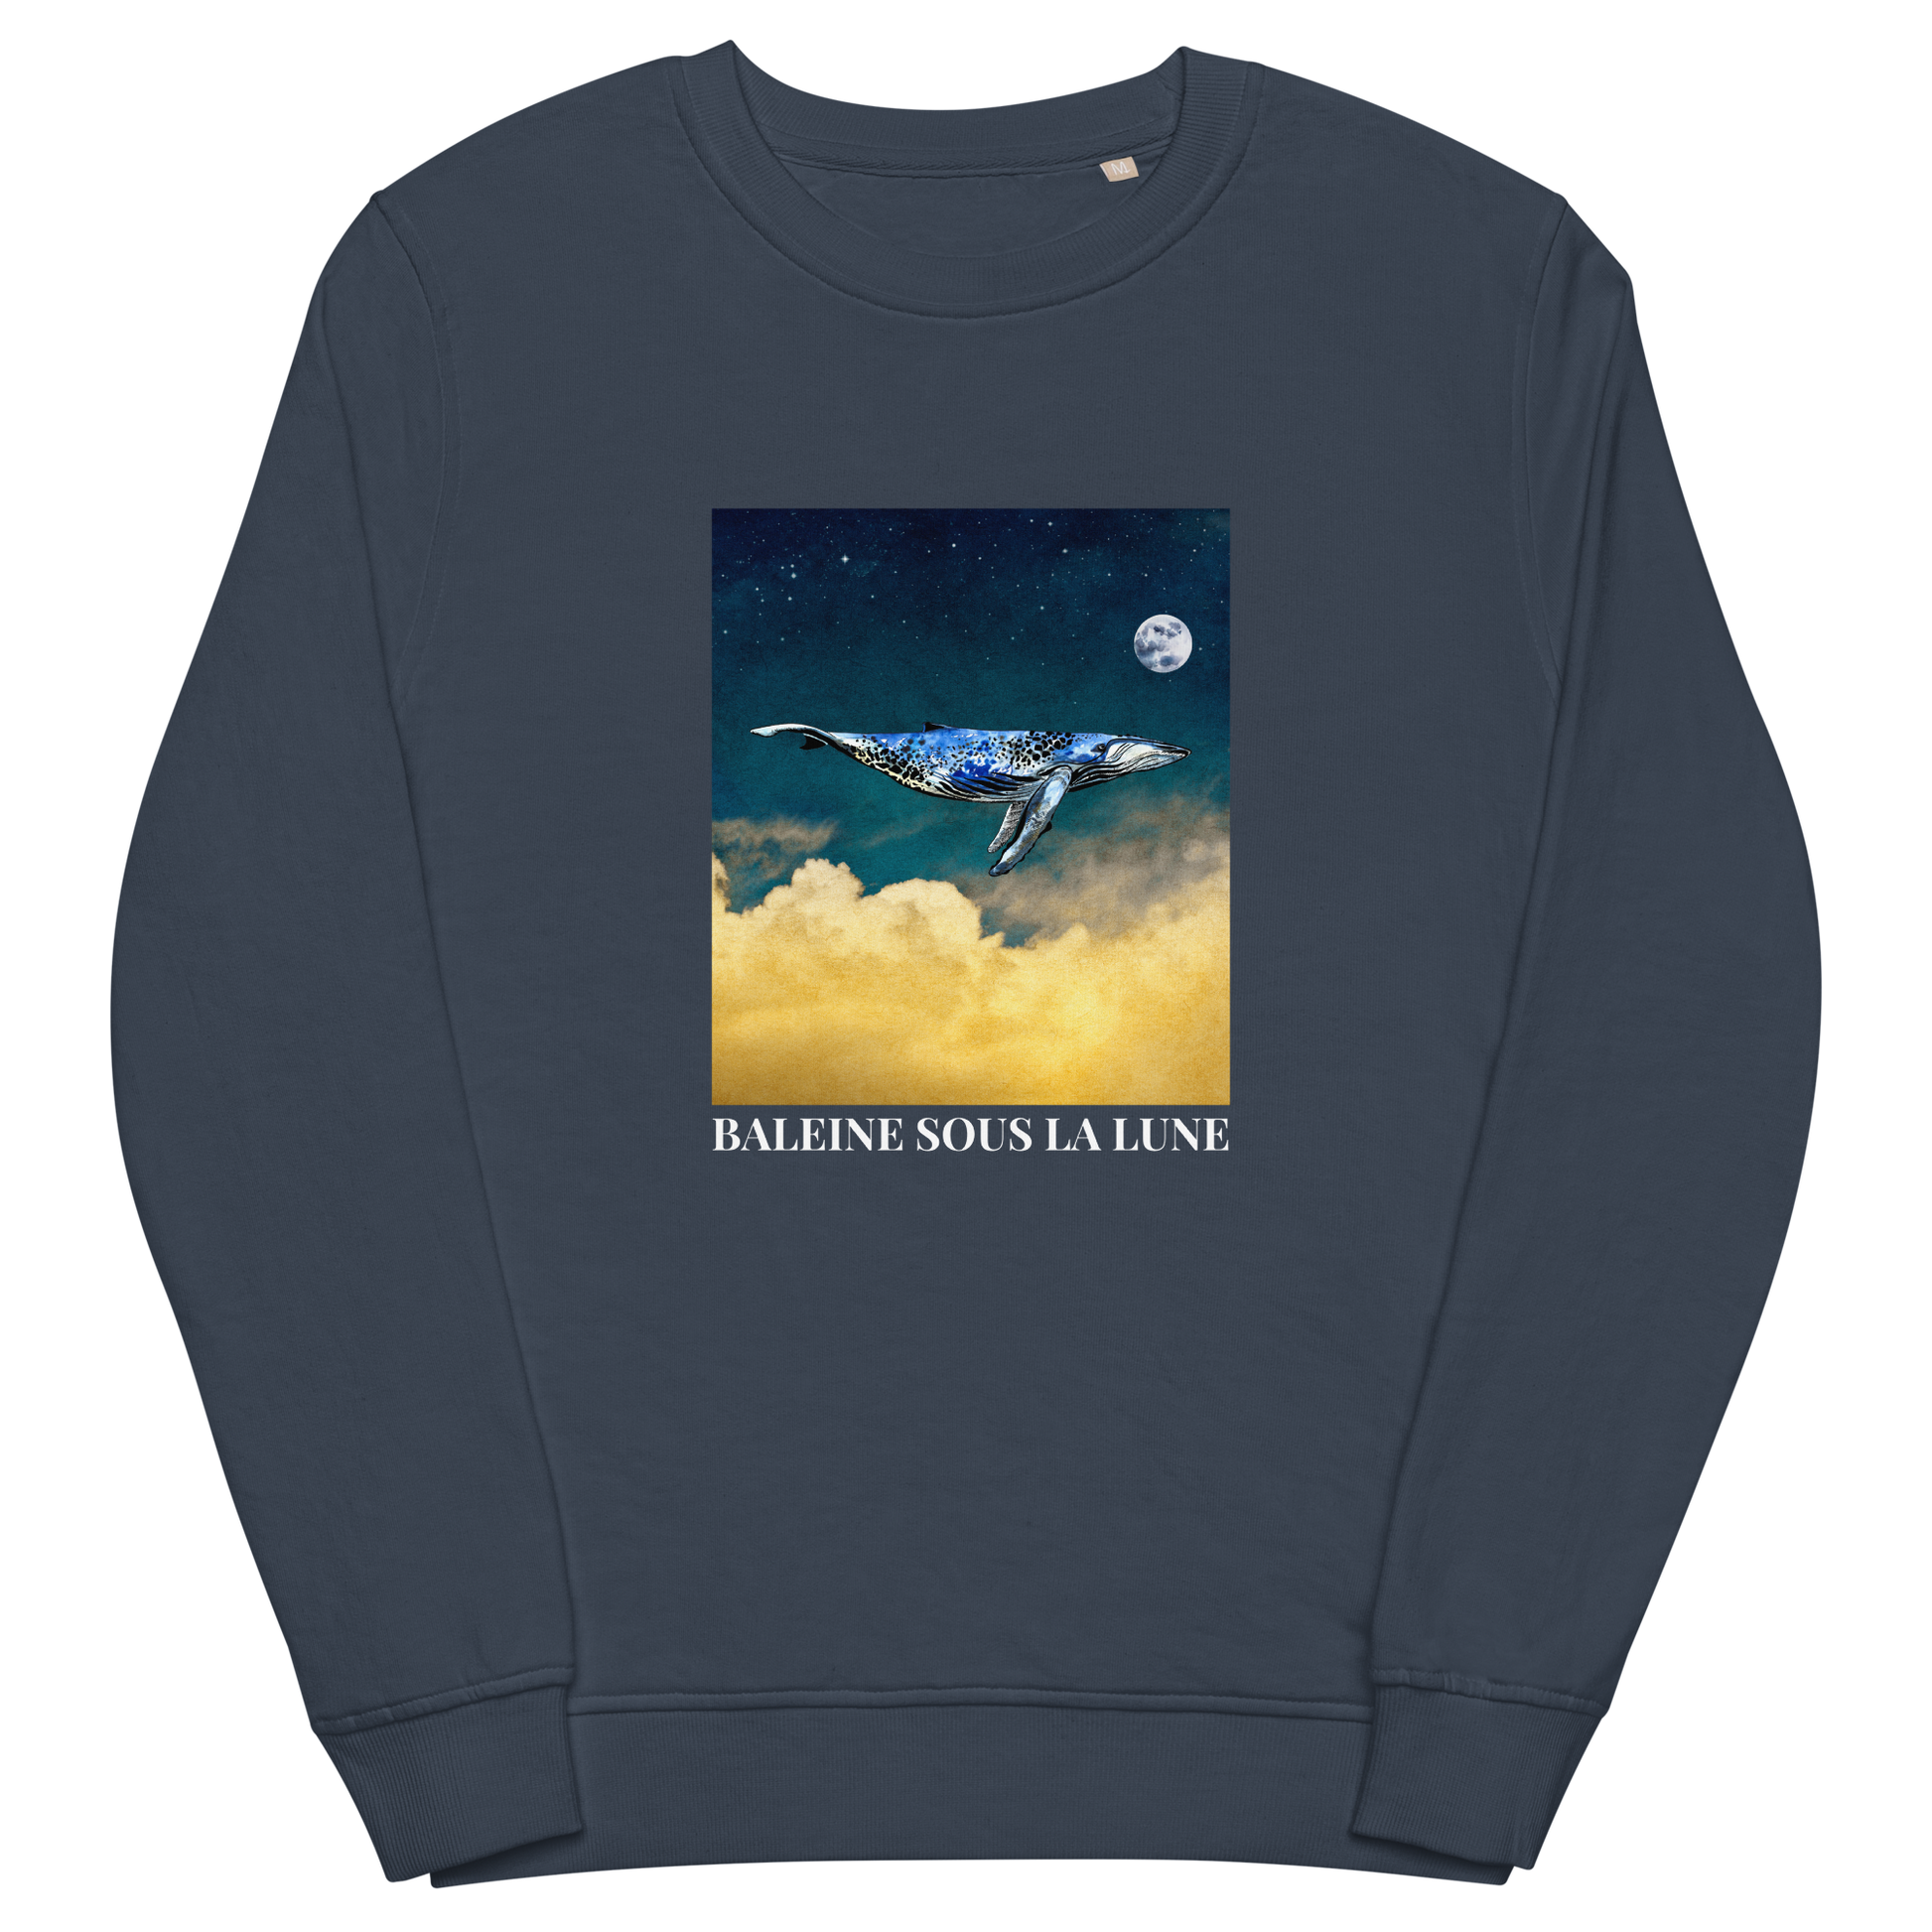 French Navy Organic Cotton Whale Sweatshirt showcasing an enchanting Whale Under The Moon graphic on the chest - Cool Whale Graphic Sweatshirts - Boozy Fox